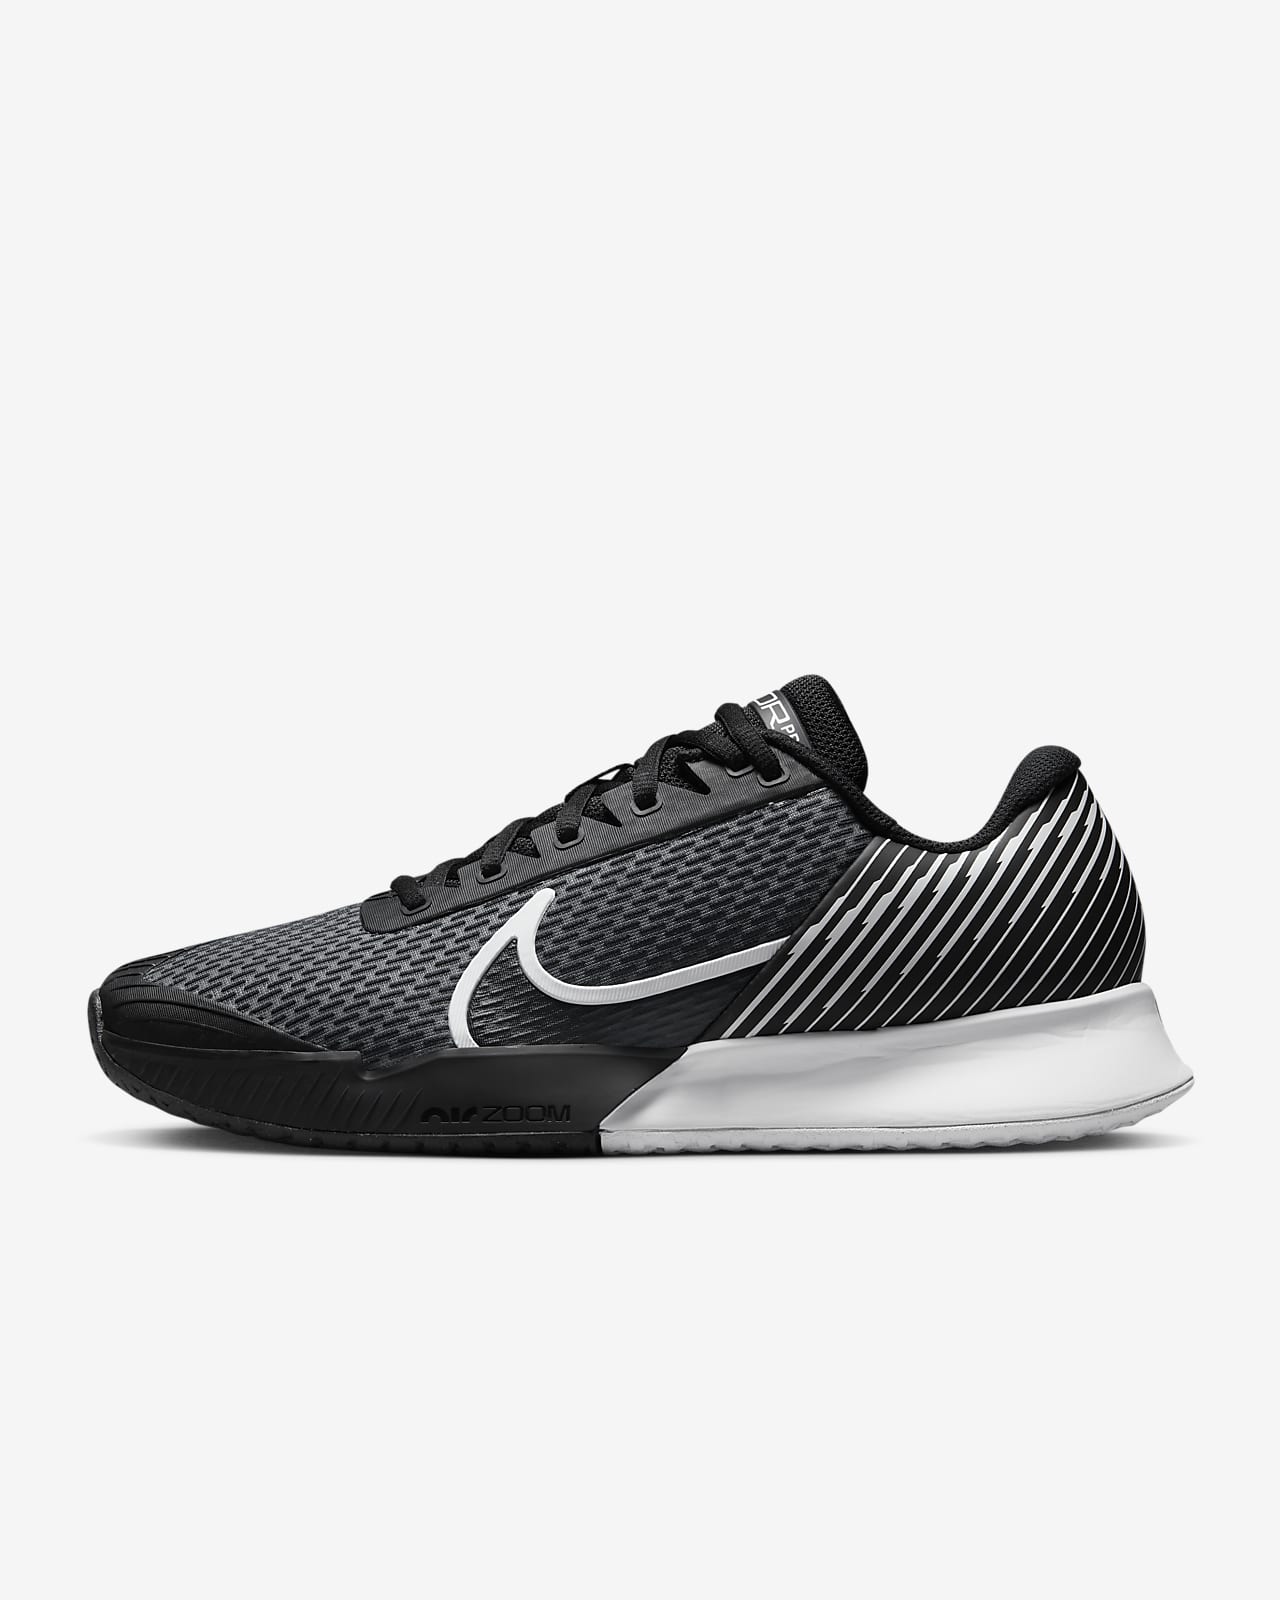 NikeCourt Zoom Pro 2 Men's Hard Court Tennis Shoes. Nike